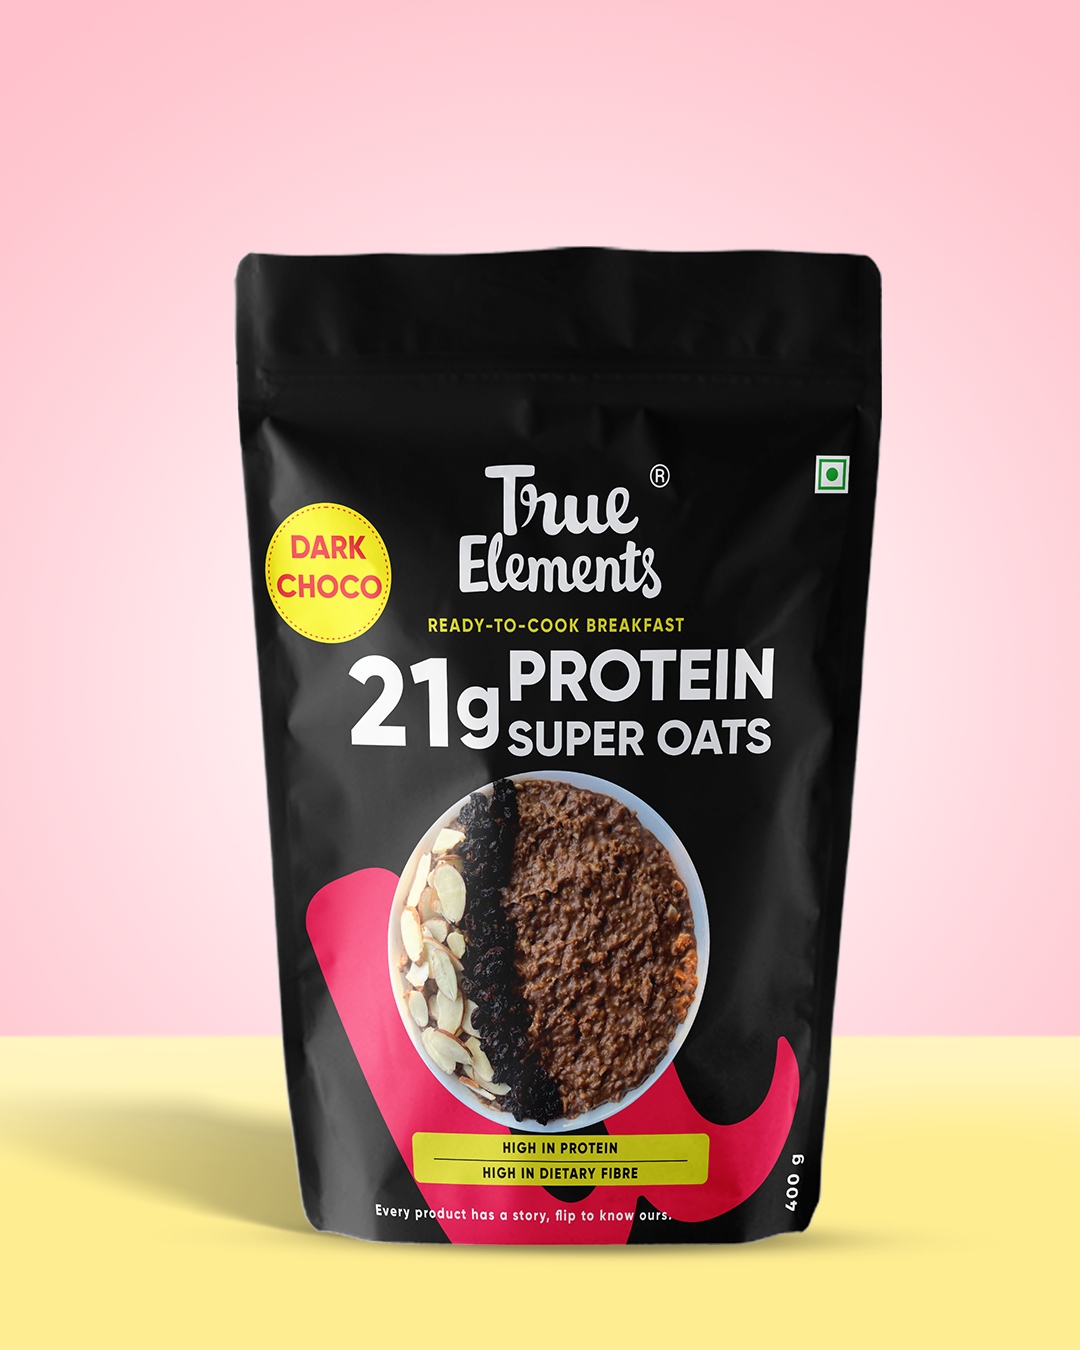 True Elements Protein Oats Dark Chocolate - Contains 21g Protein